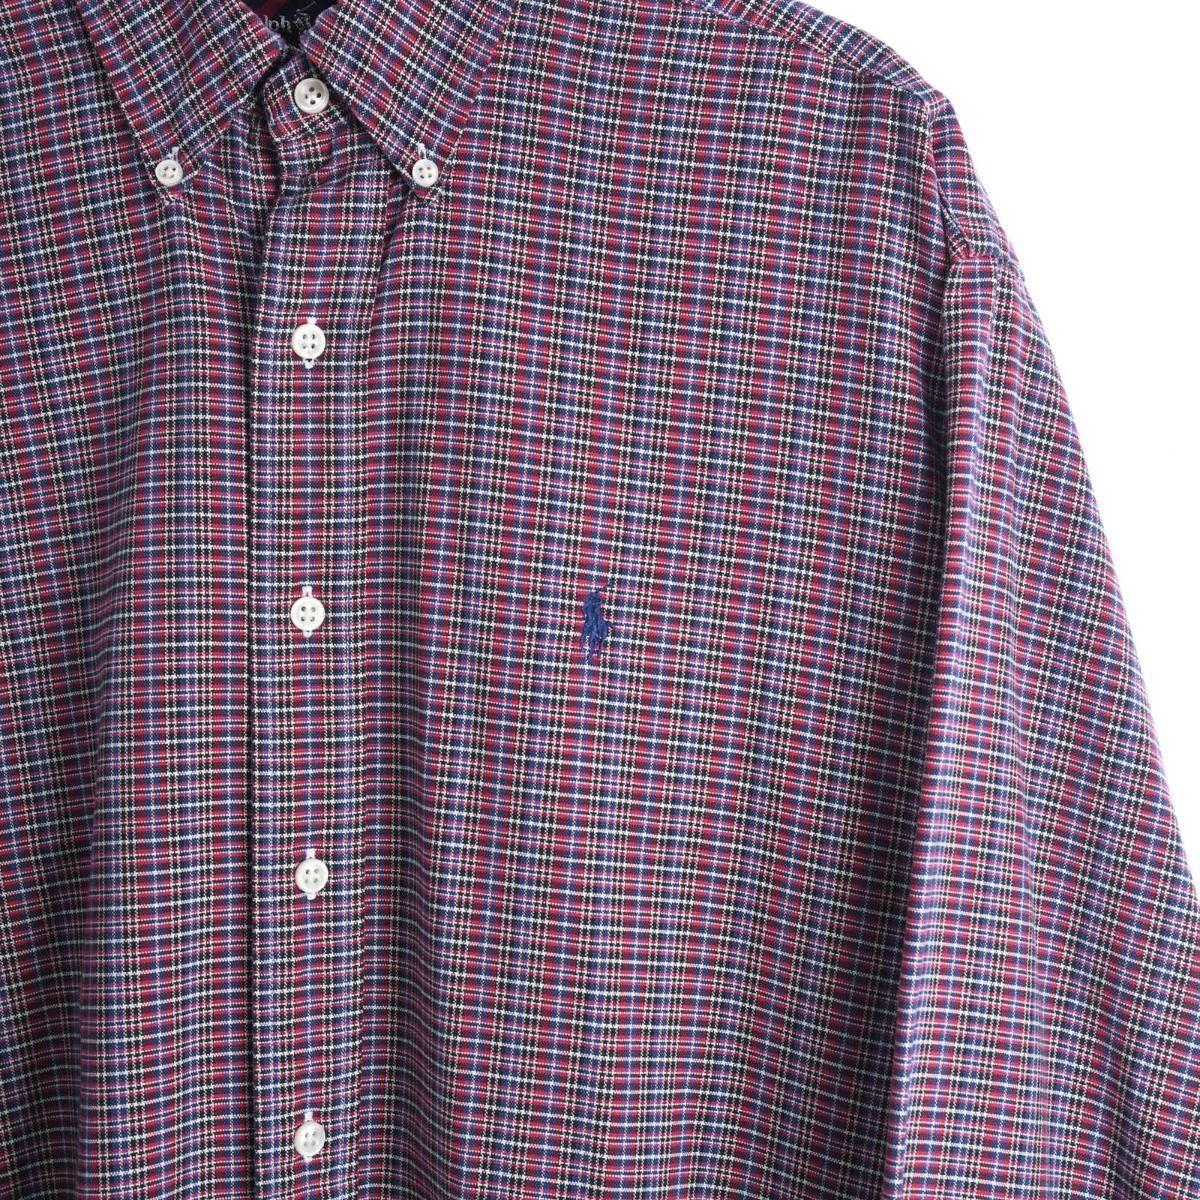  Ralph Lauren Checkered Blake Shirt